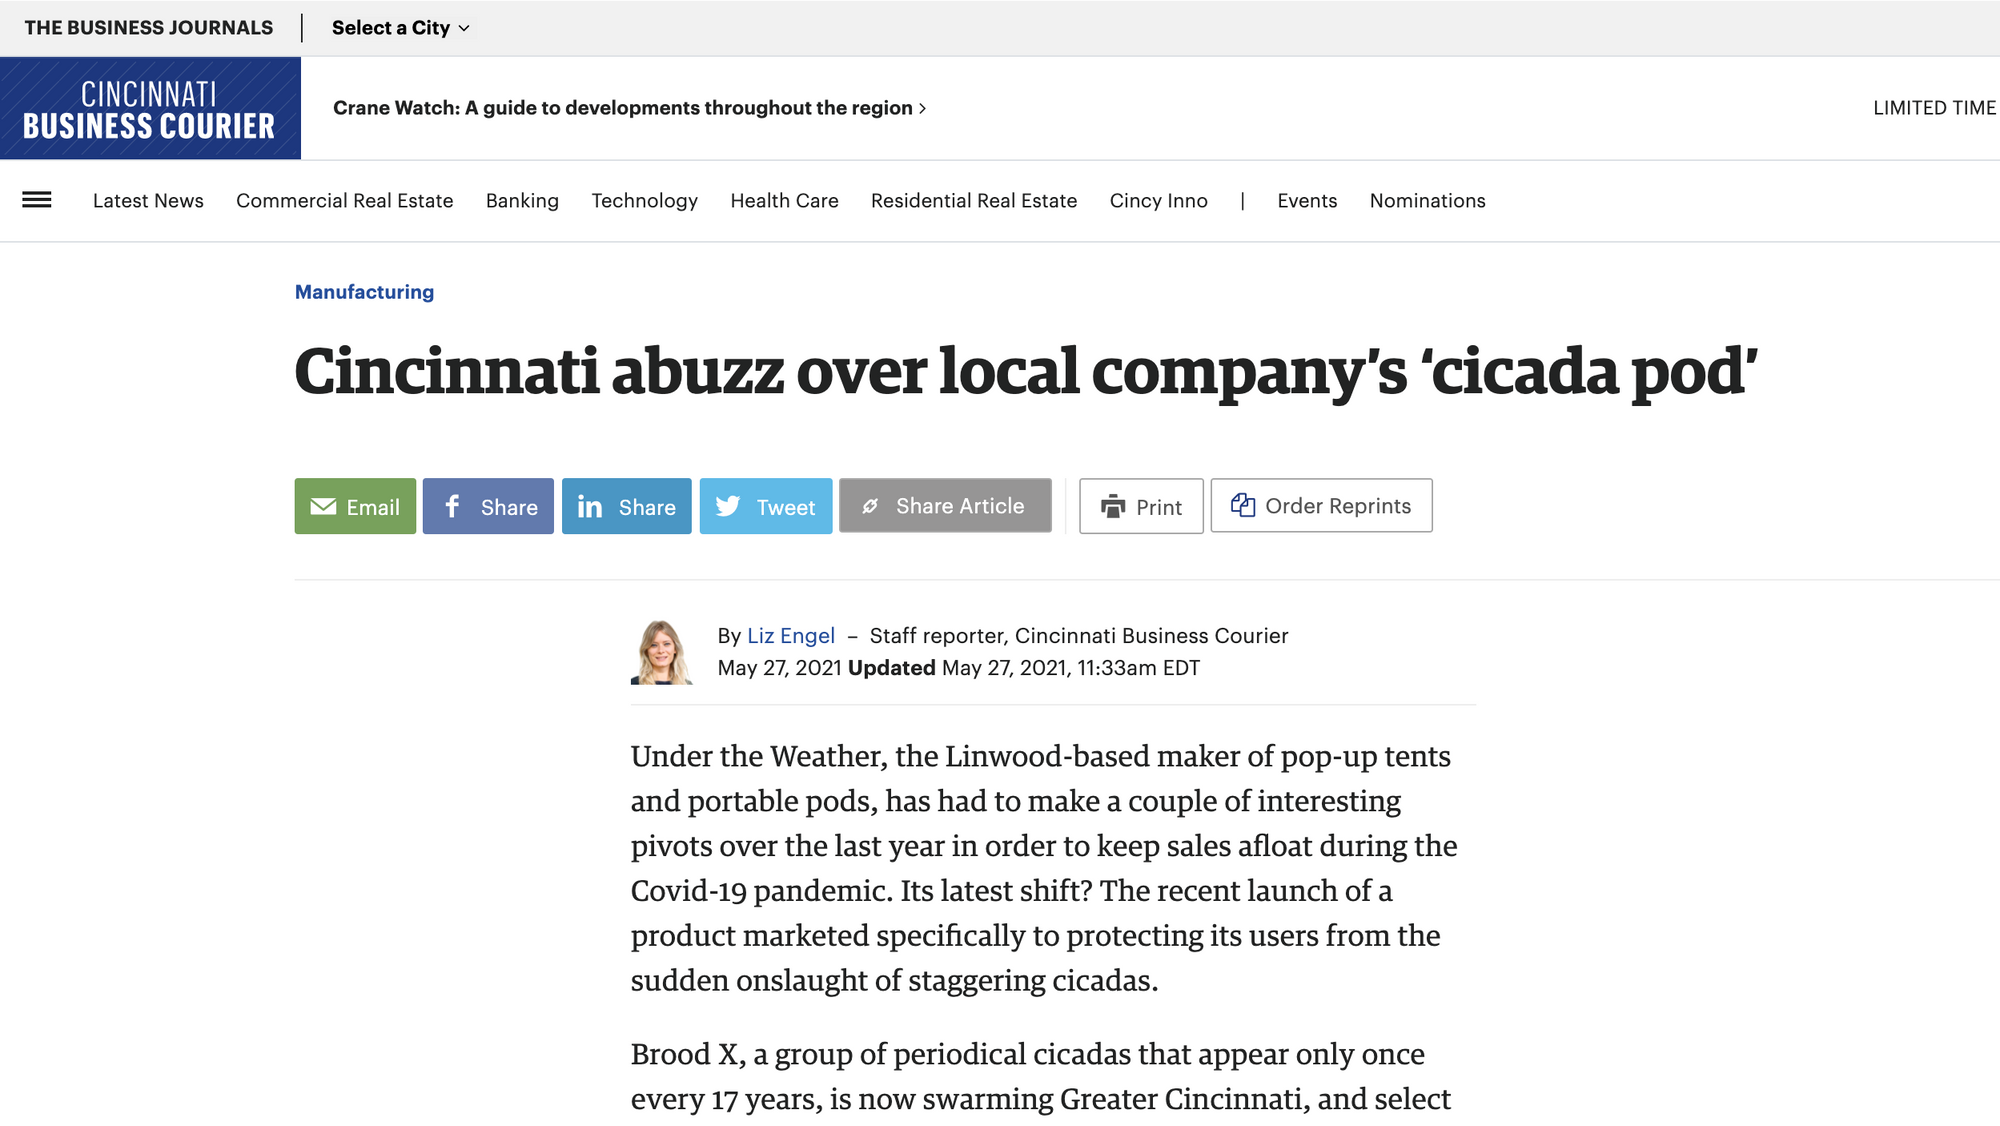 Business Courier: Cincinnati abuzz over local company’s ‘cicada pod’